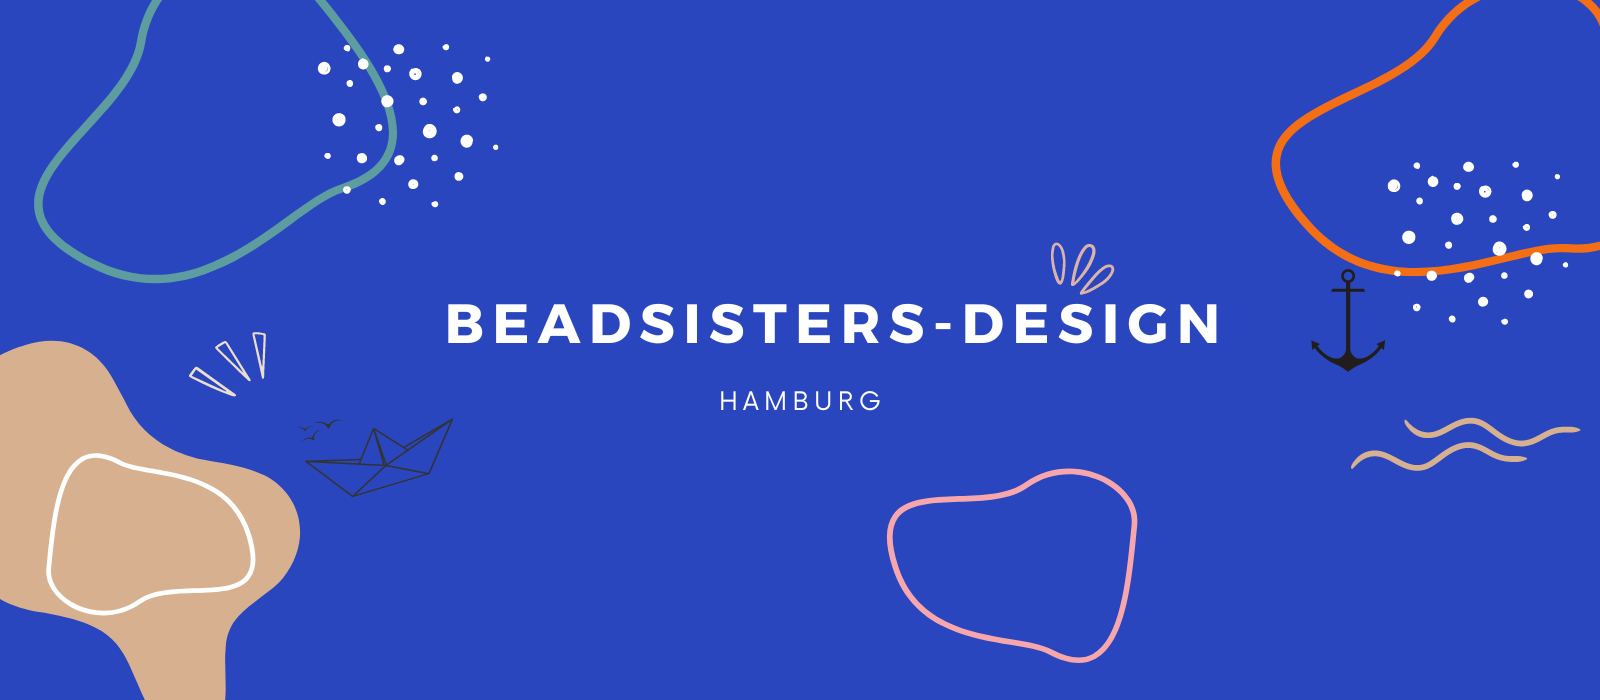 Beadsisters-Design